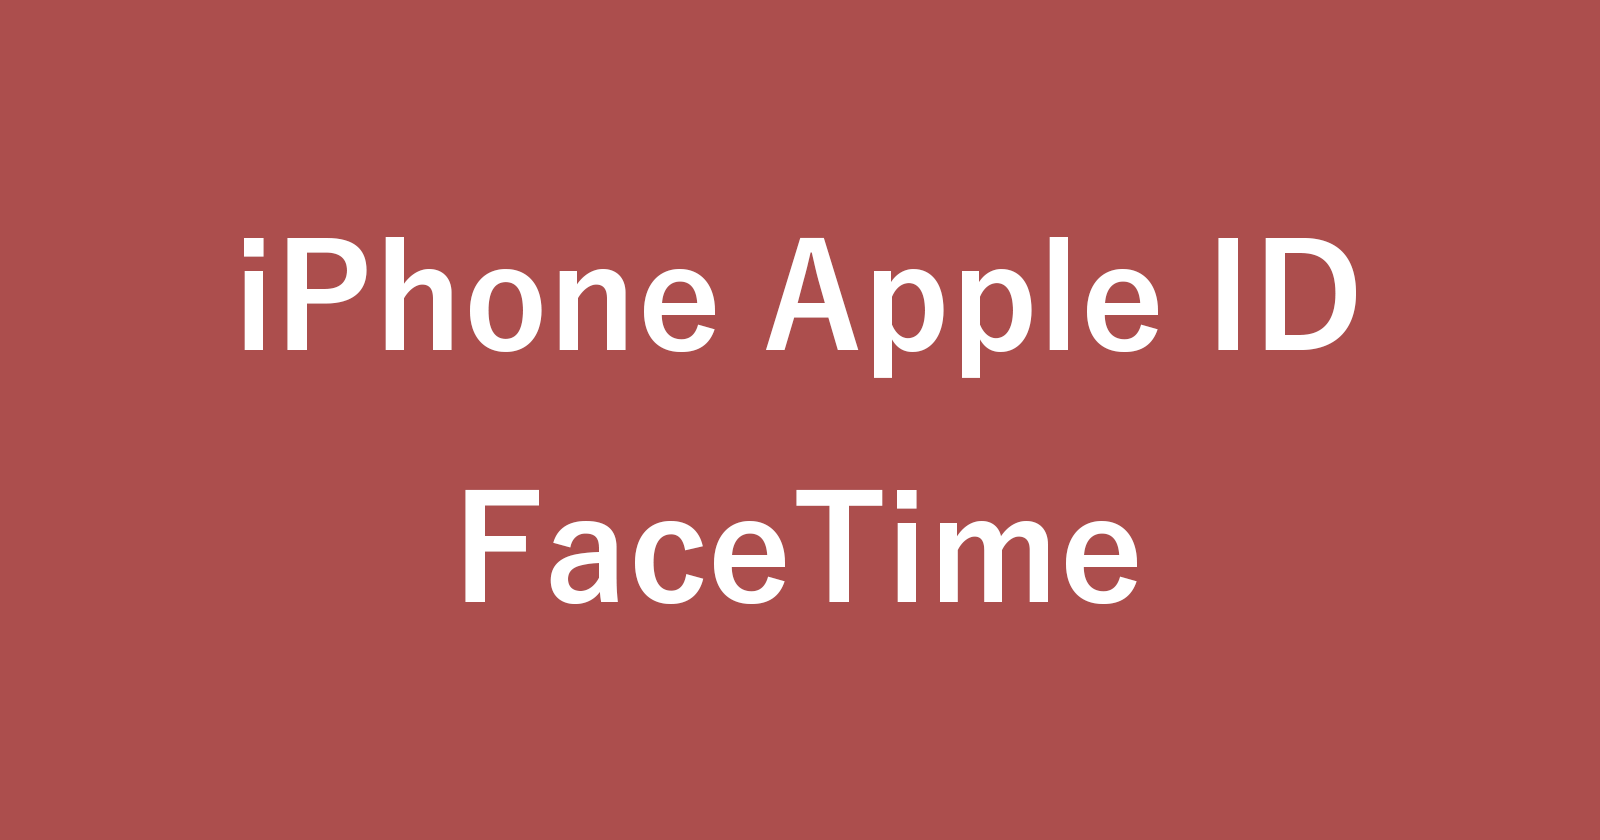 iphone apple id facetime